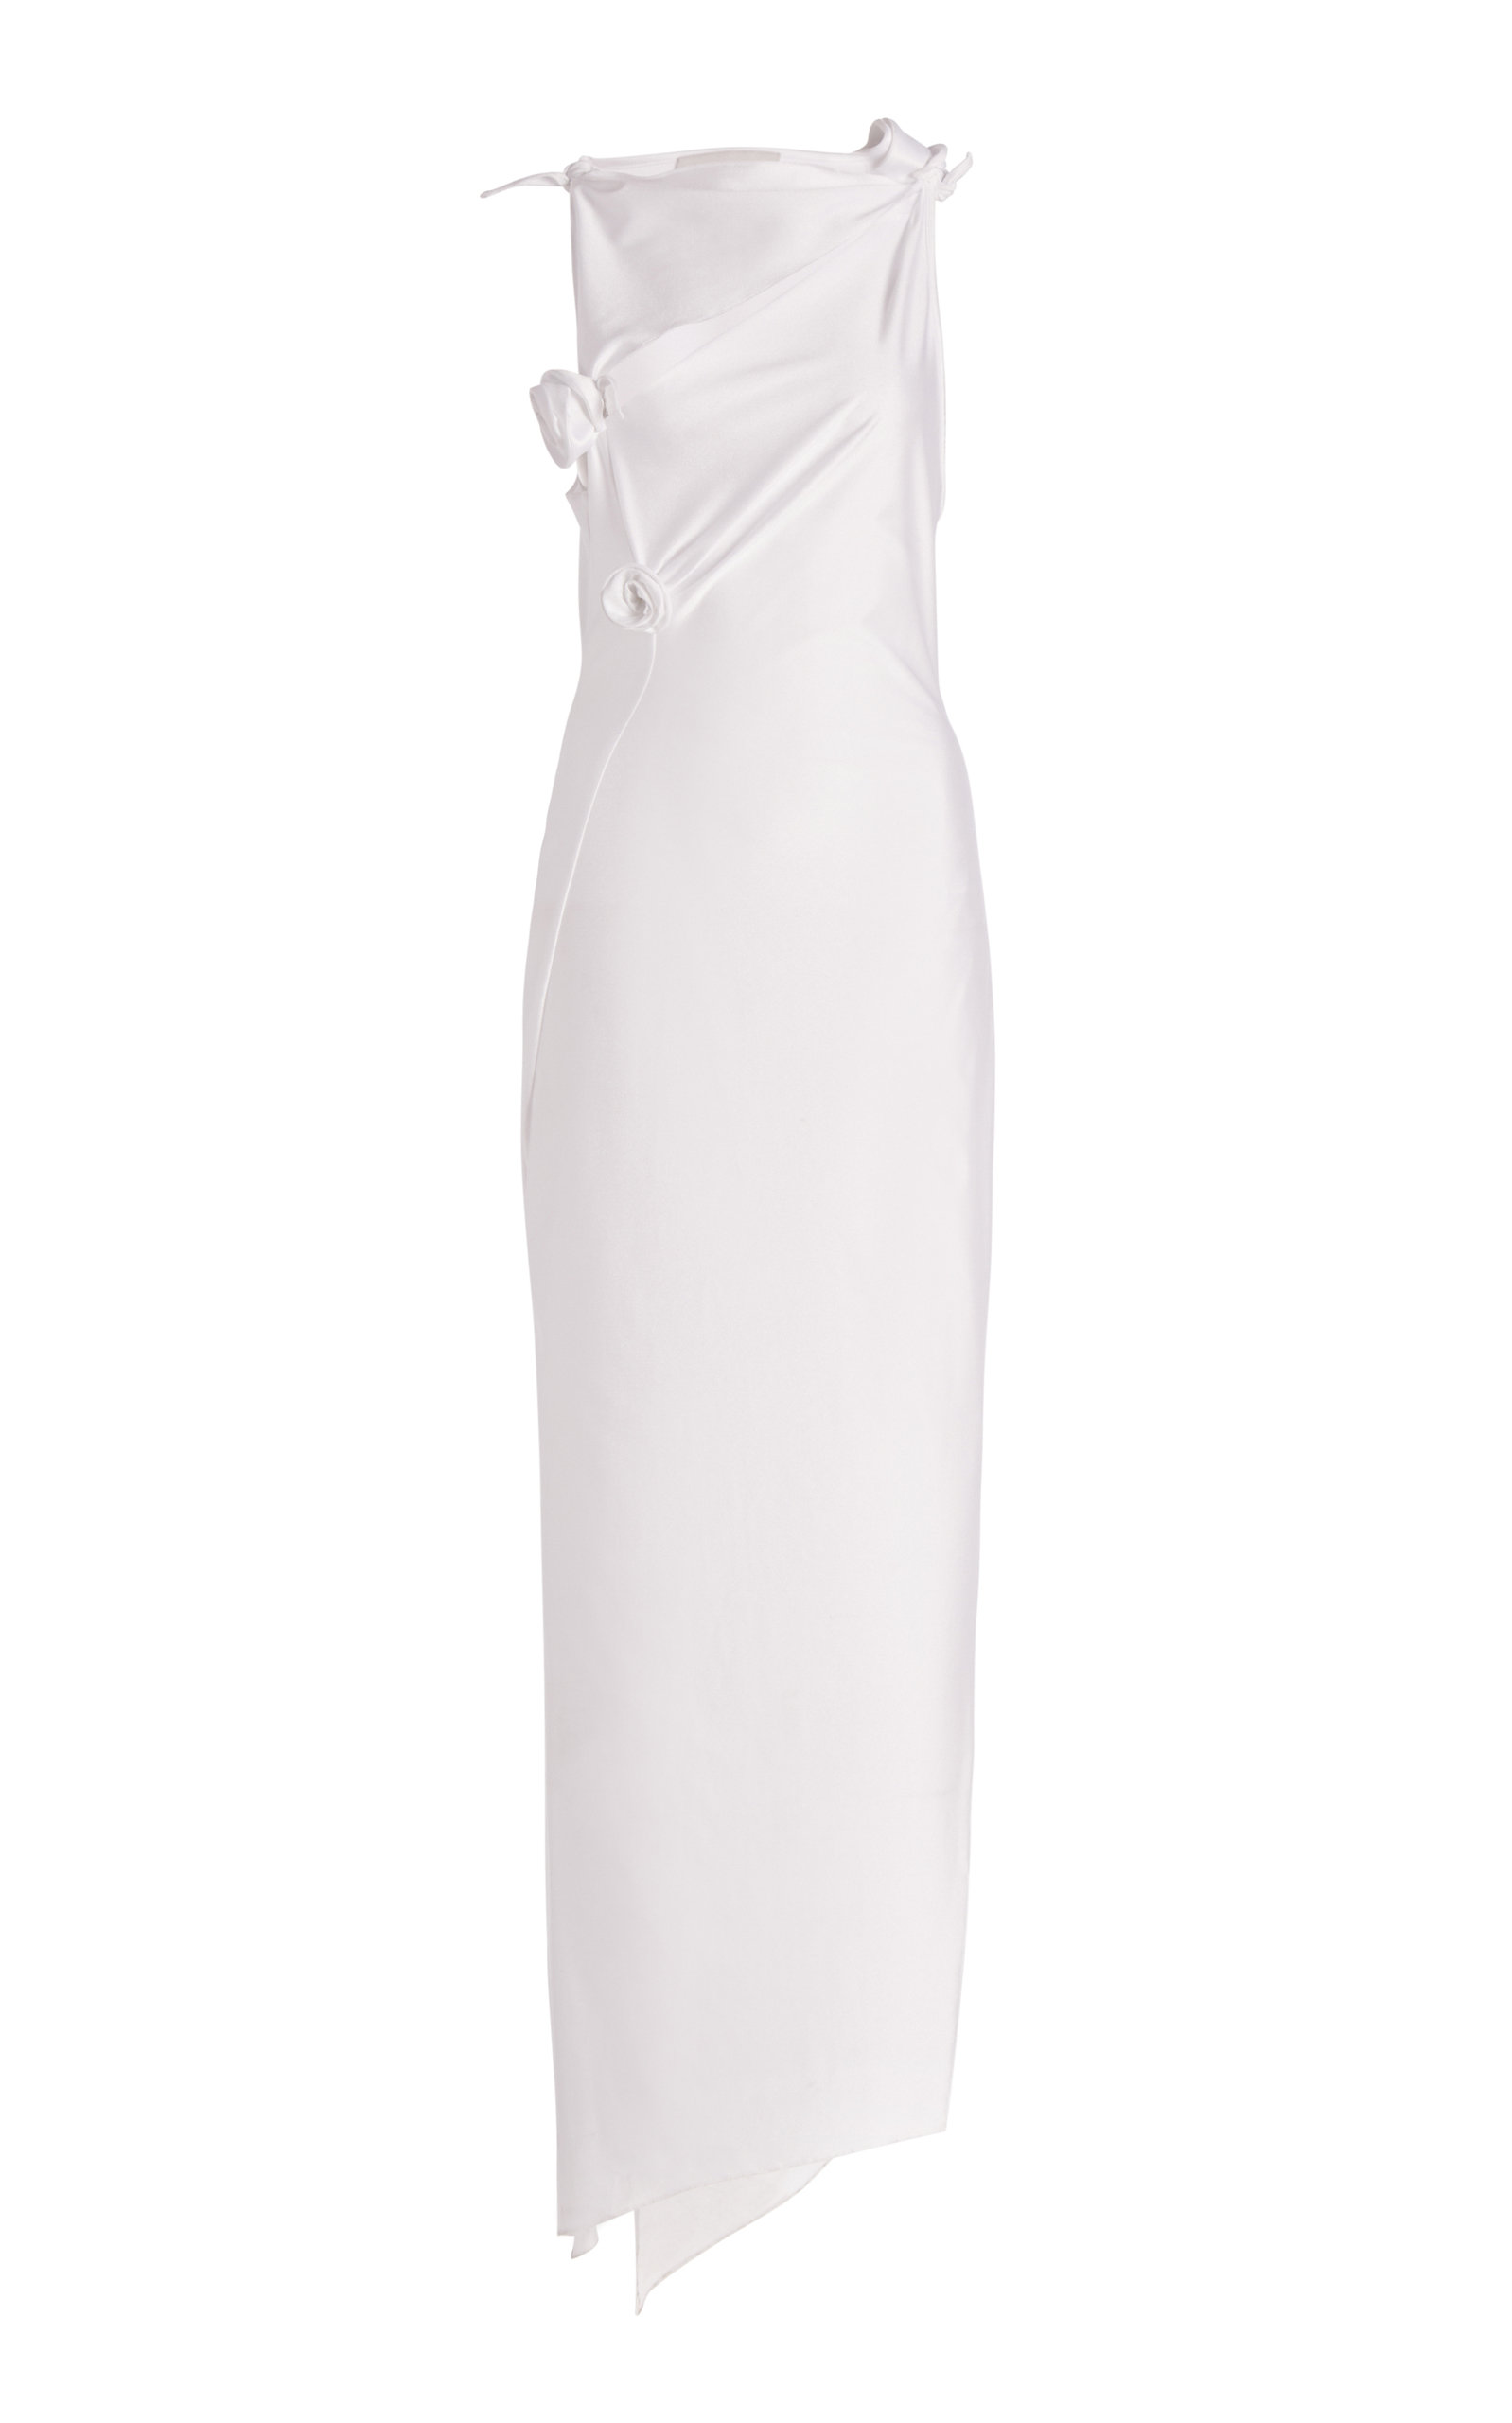 Coperni - Women's Asymmetric Flower Adorned Maxi Dress - White/black - Only At Moda Operandi